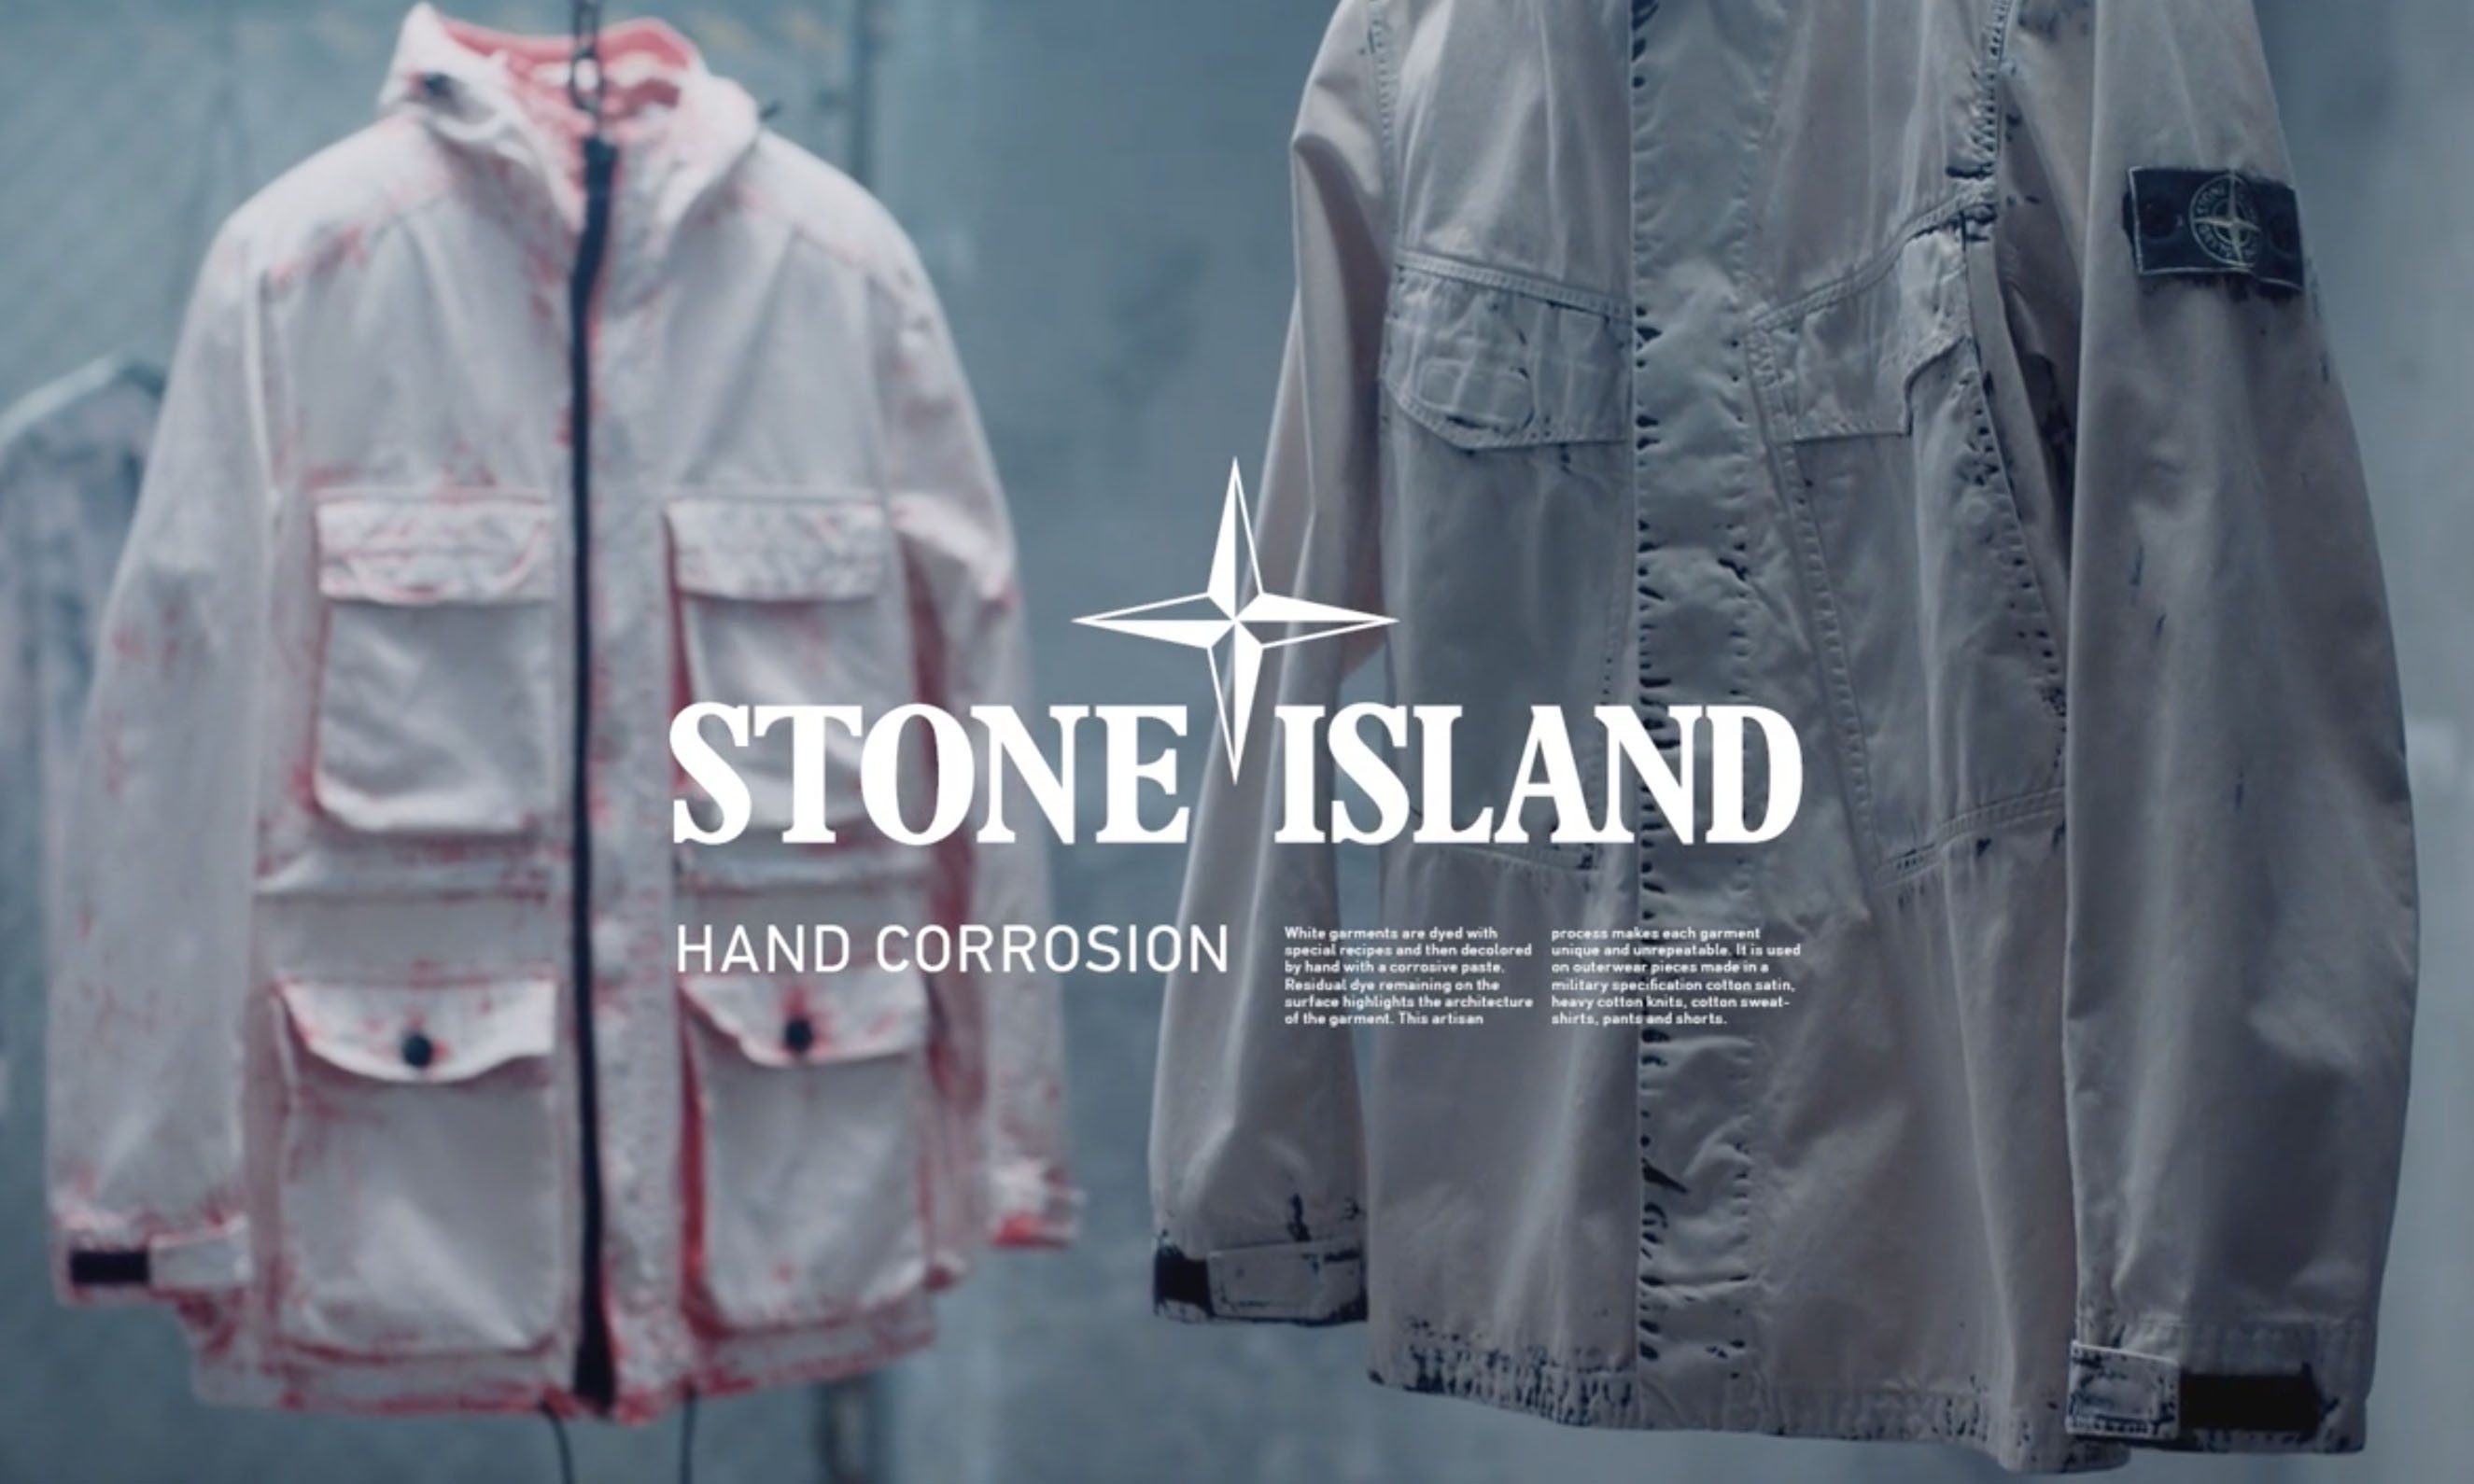 Stone Island 发布 2017 春夏 HAND CORROSION 系列手工染色系列